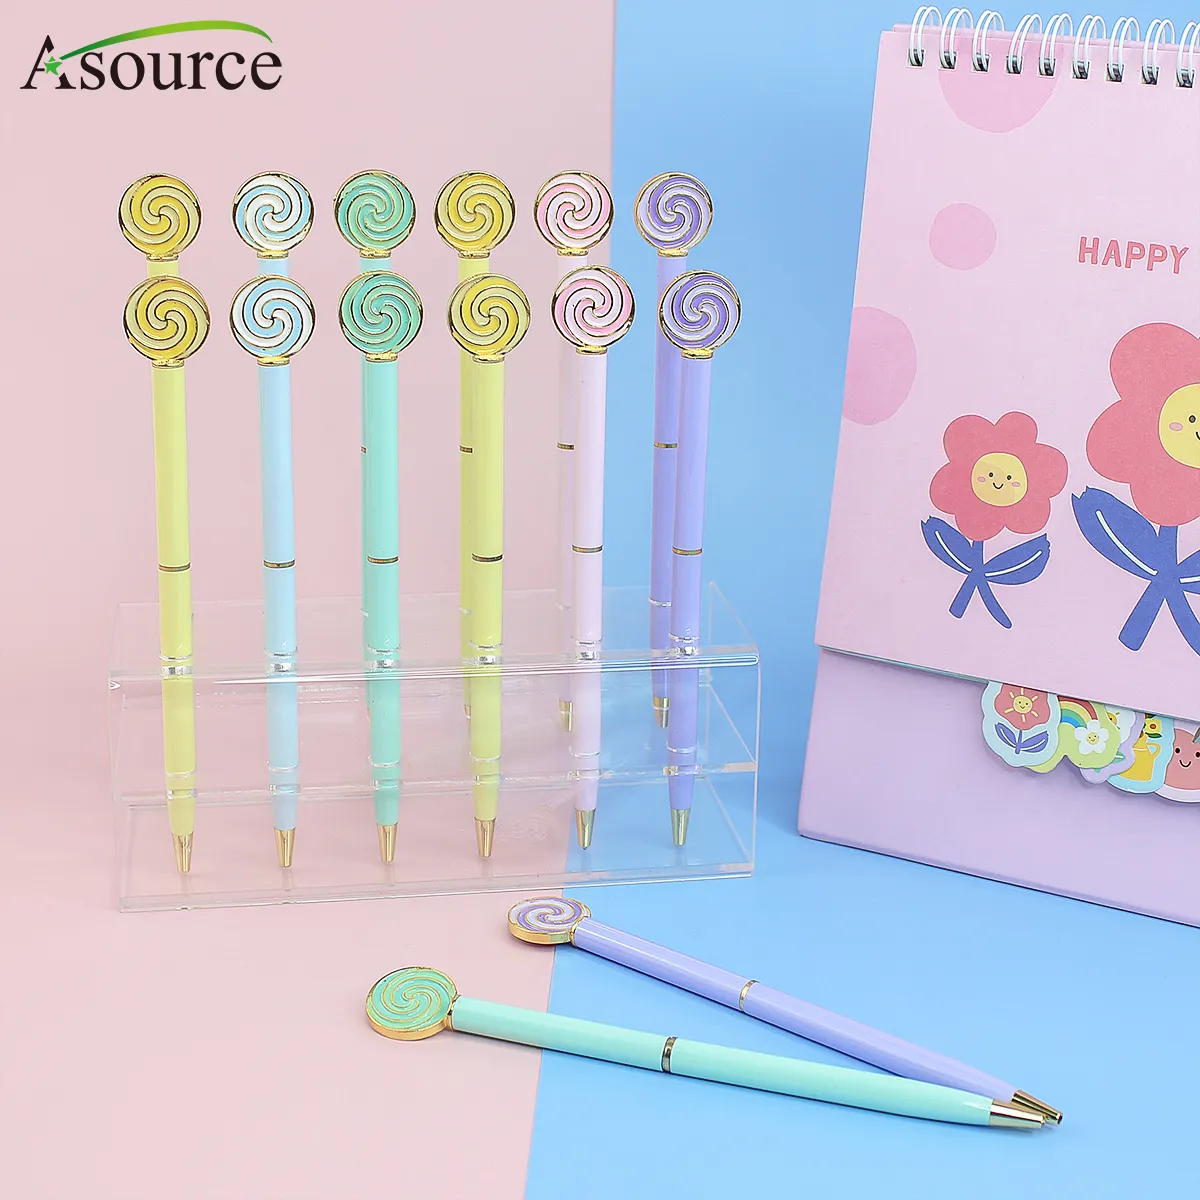 New Arrival Novelty Gift Pen Cute Pen with Lollipop Topper